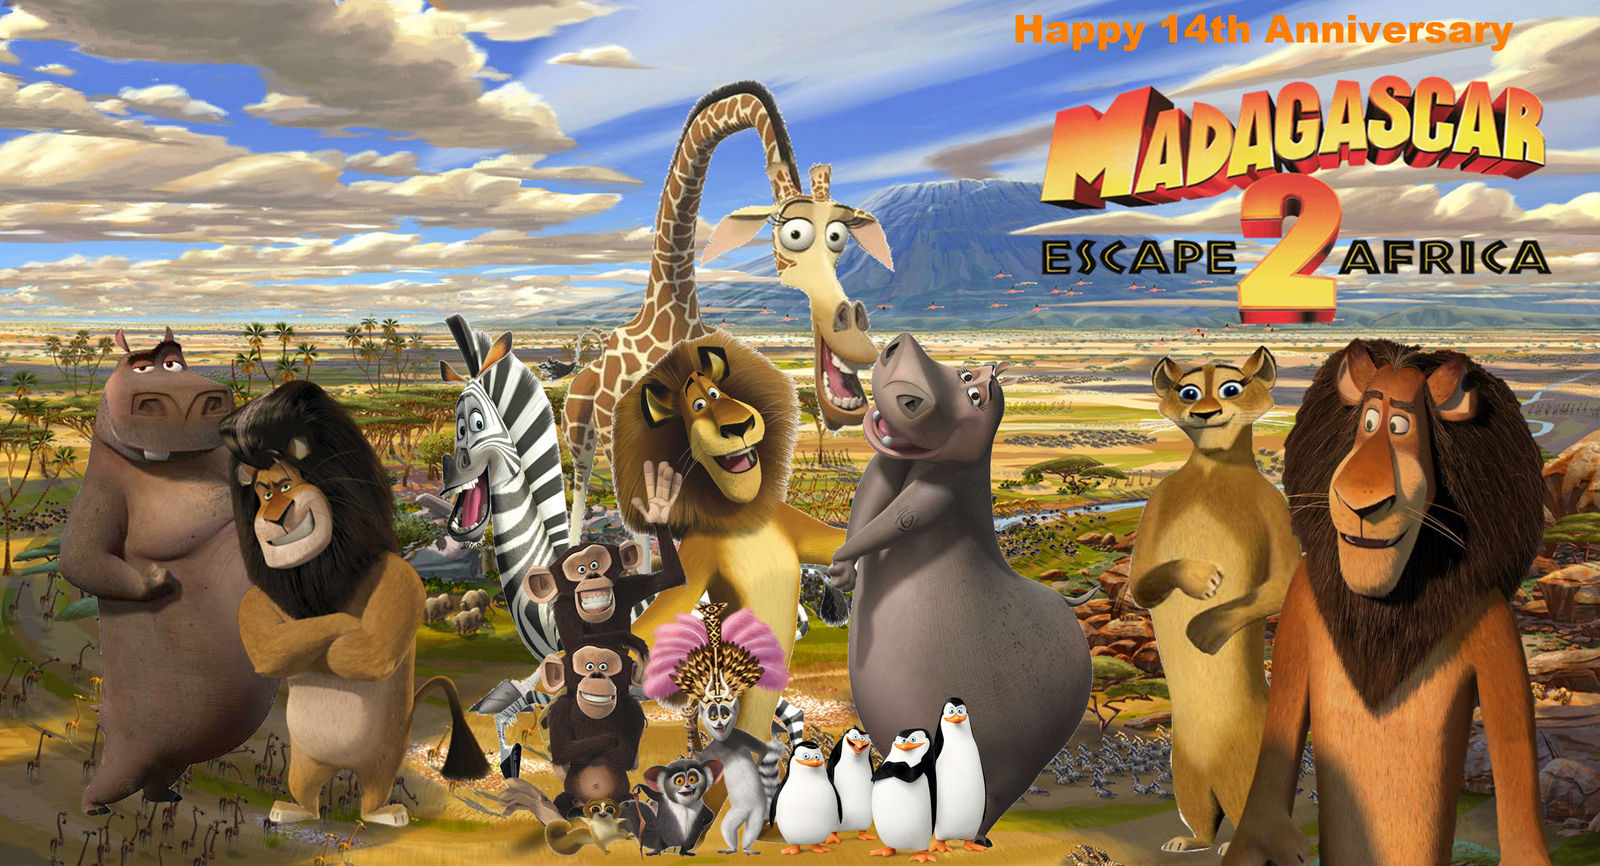 Madagascar Escape 2 Africa (2008) Gloria and Moto Moto's Date/Melman  Confesses 